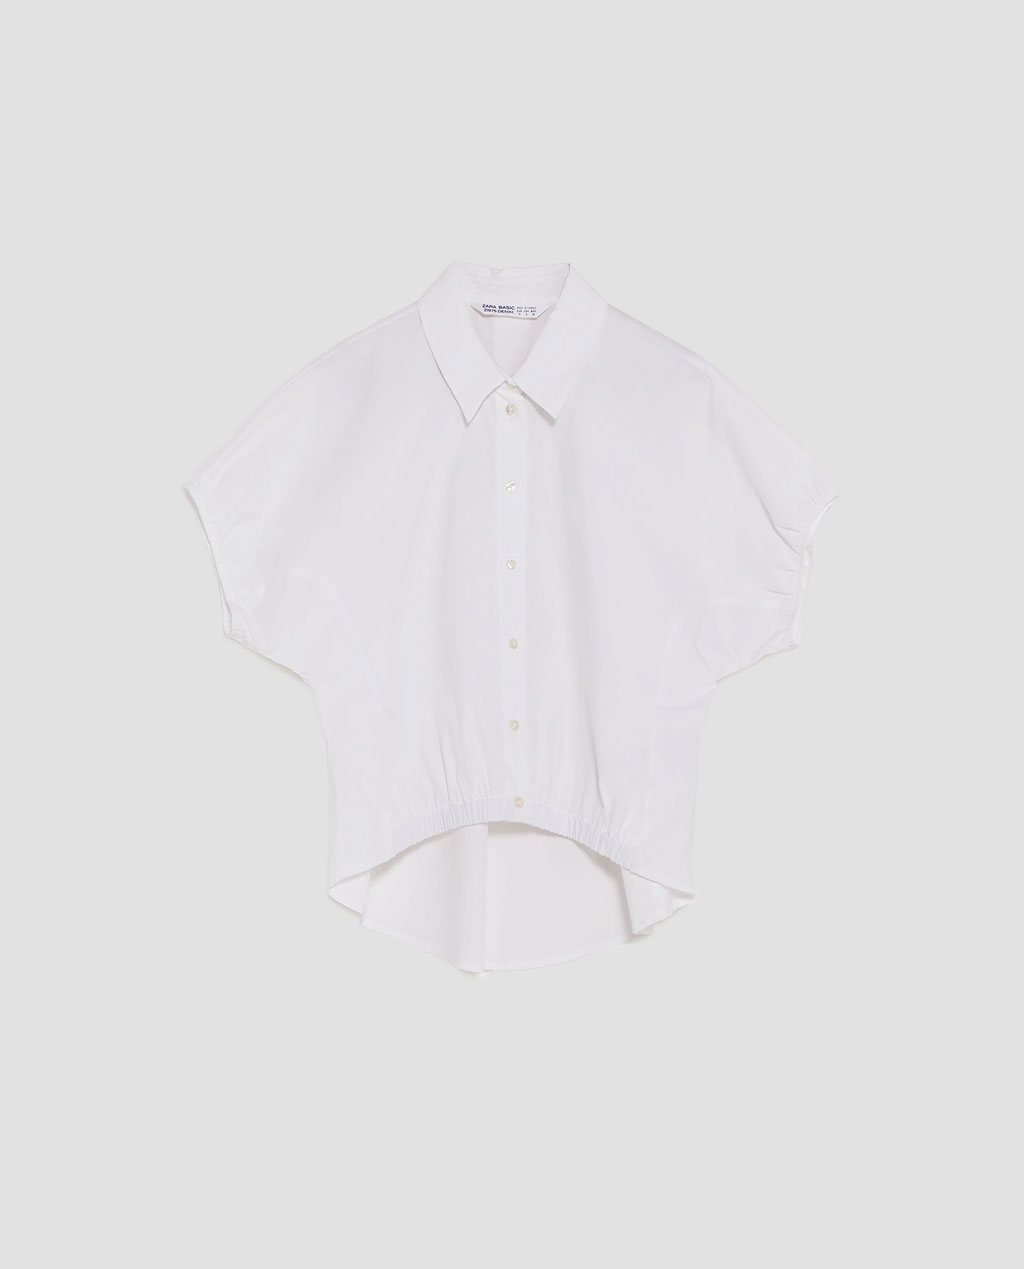 camisa popelina assimétrica, Zara, €22,95